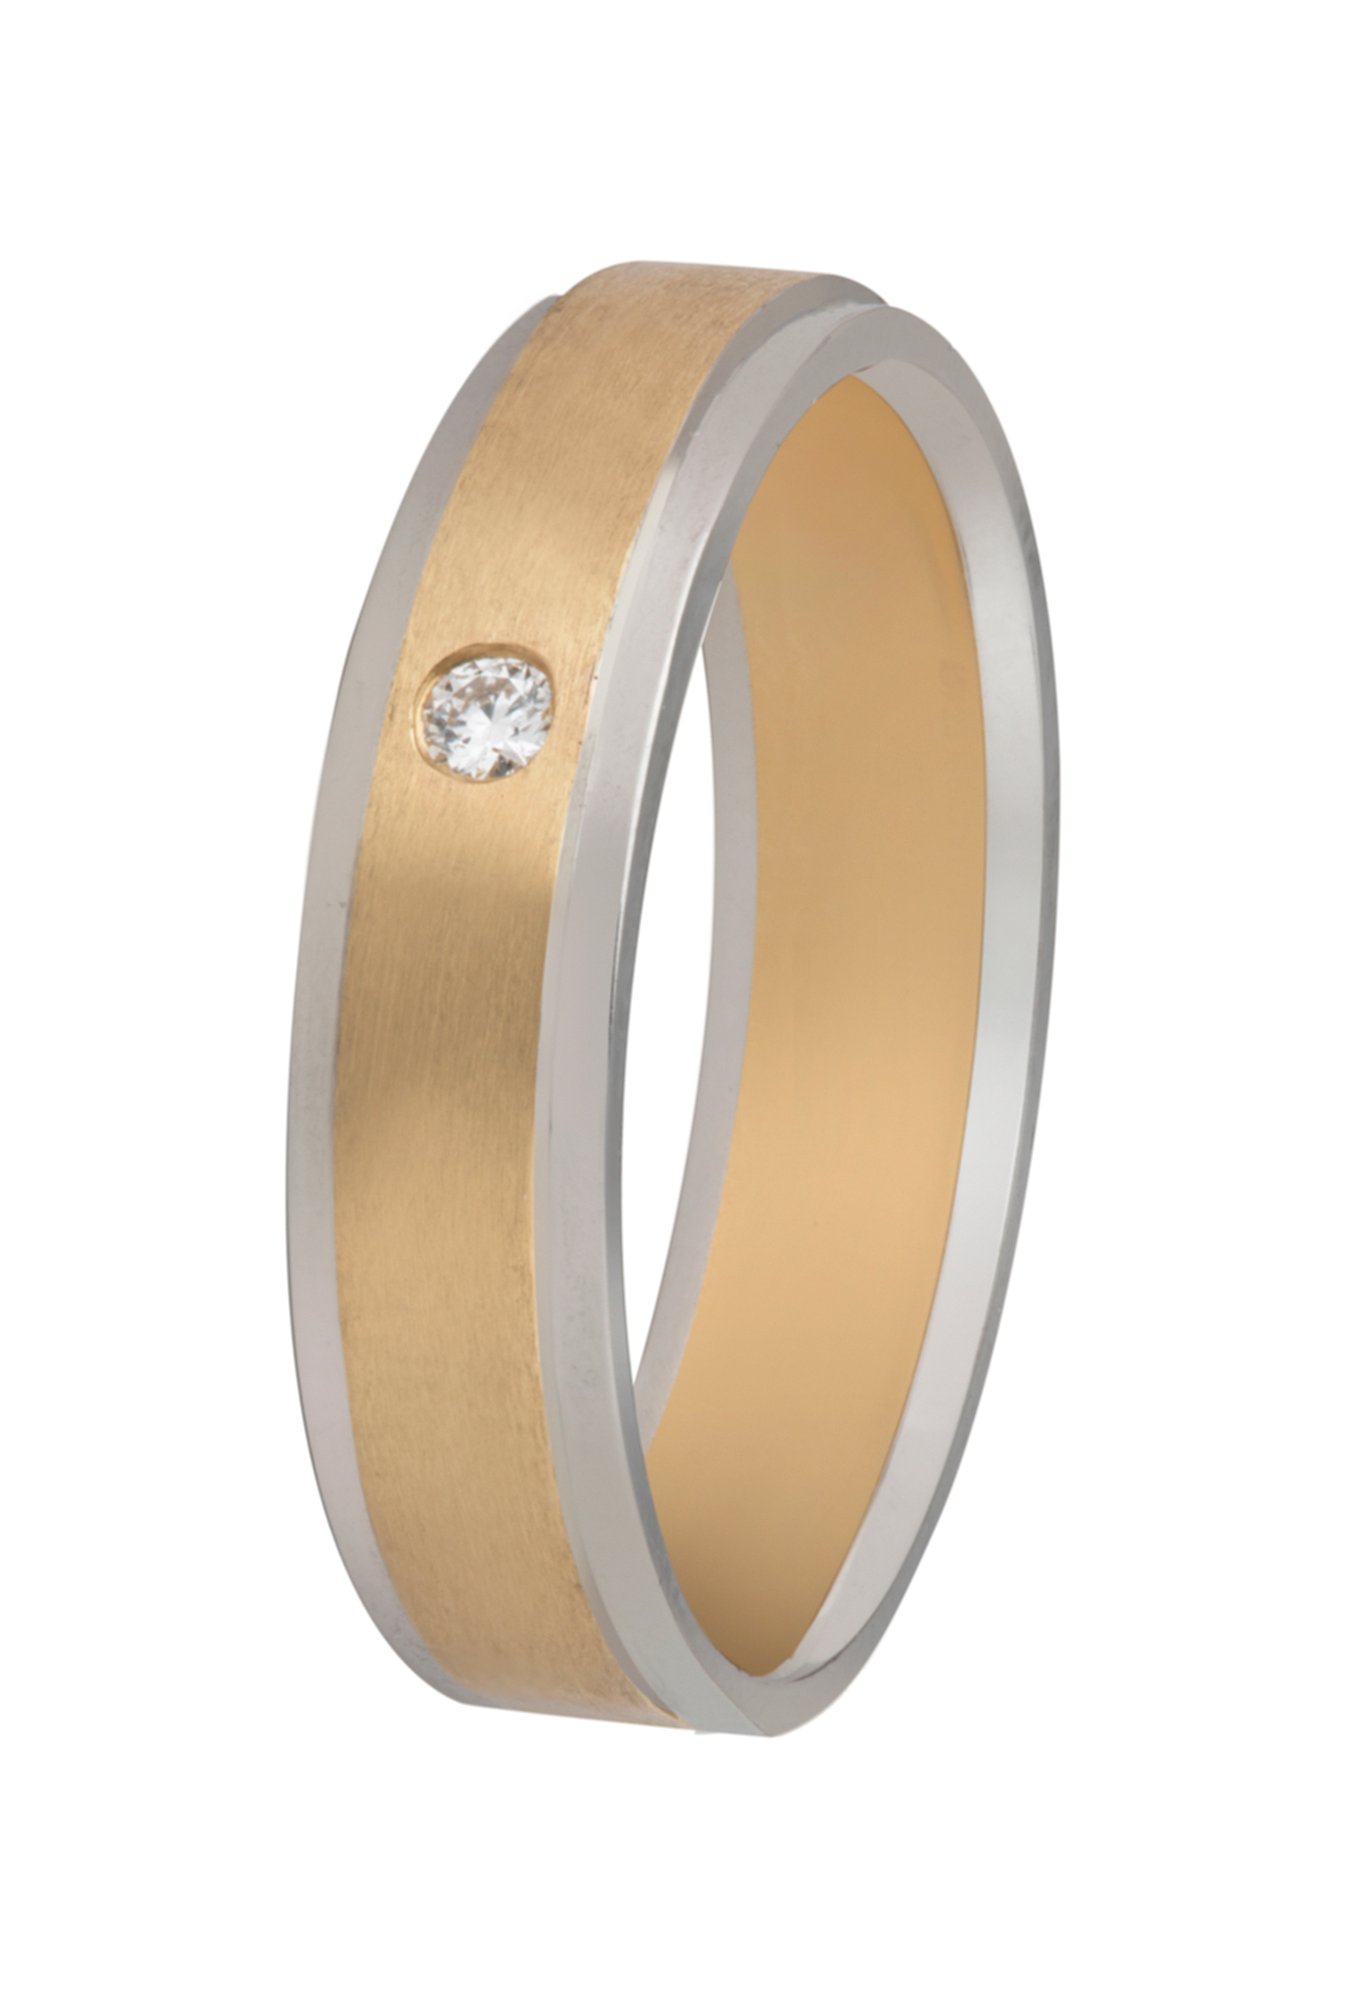 925 Sterling Silver Crossover Design Rings for Couples | Sterling Silver  Jewelry | Wholesale Jewelry Manufacturer | HUNGKUANG